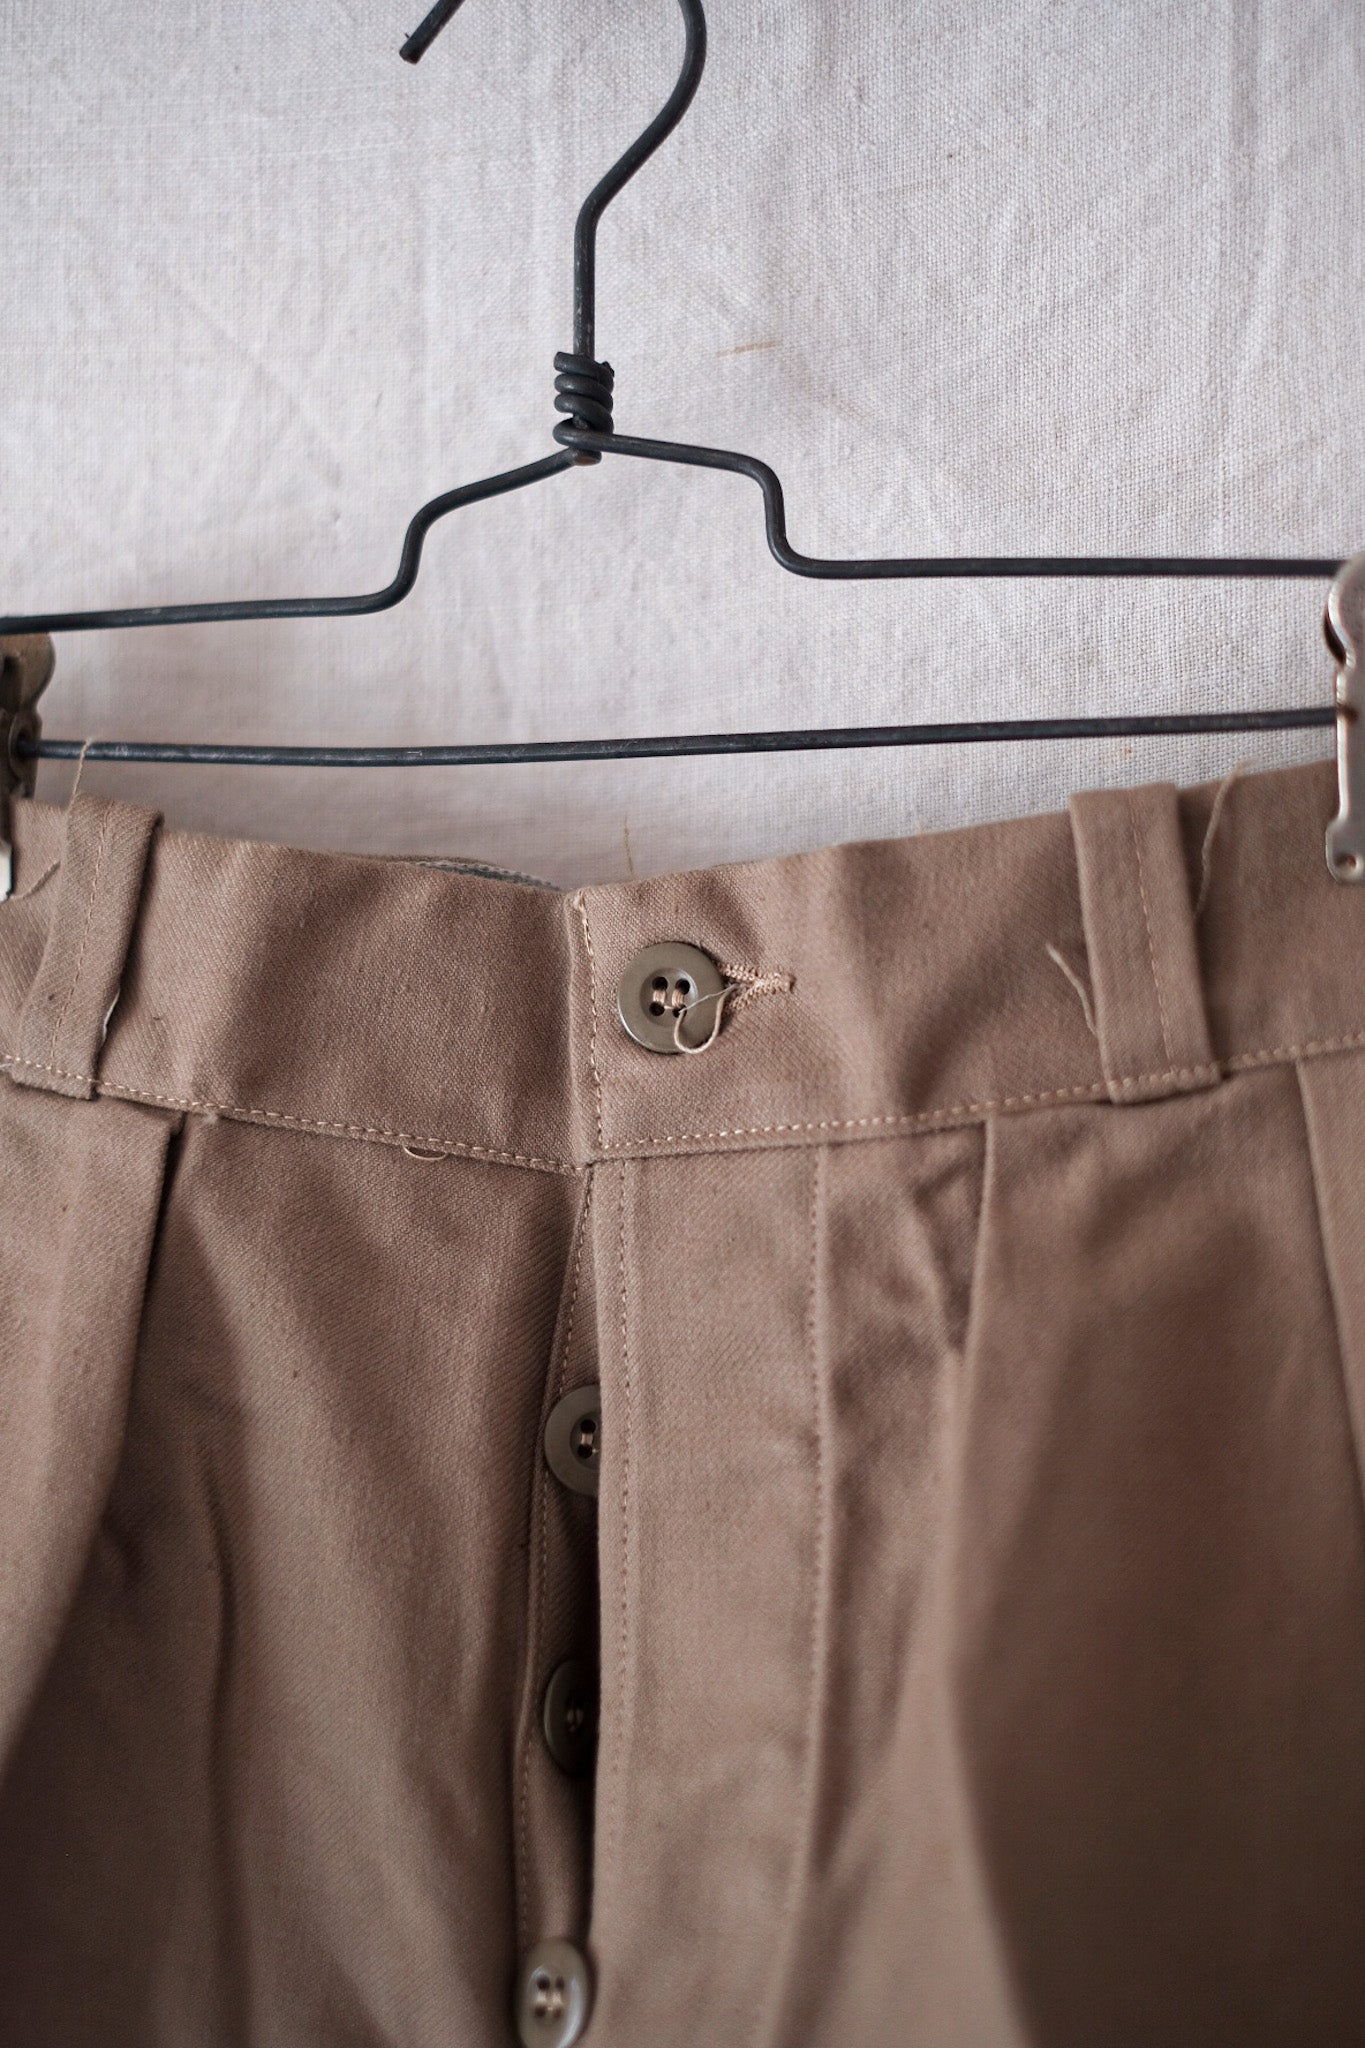 [~ 50's] shorts chino vintage français "stock mort"